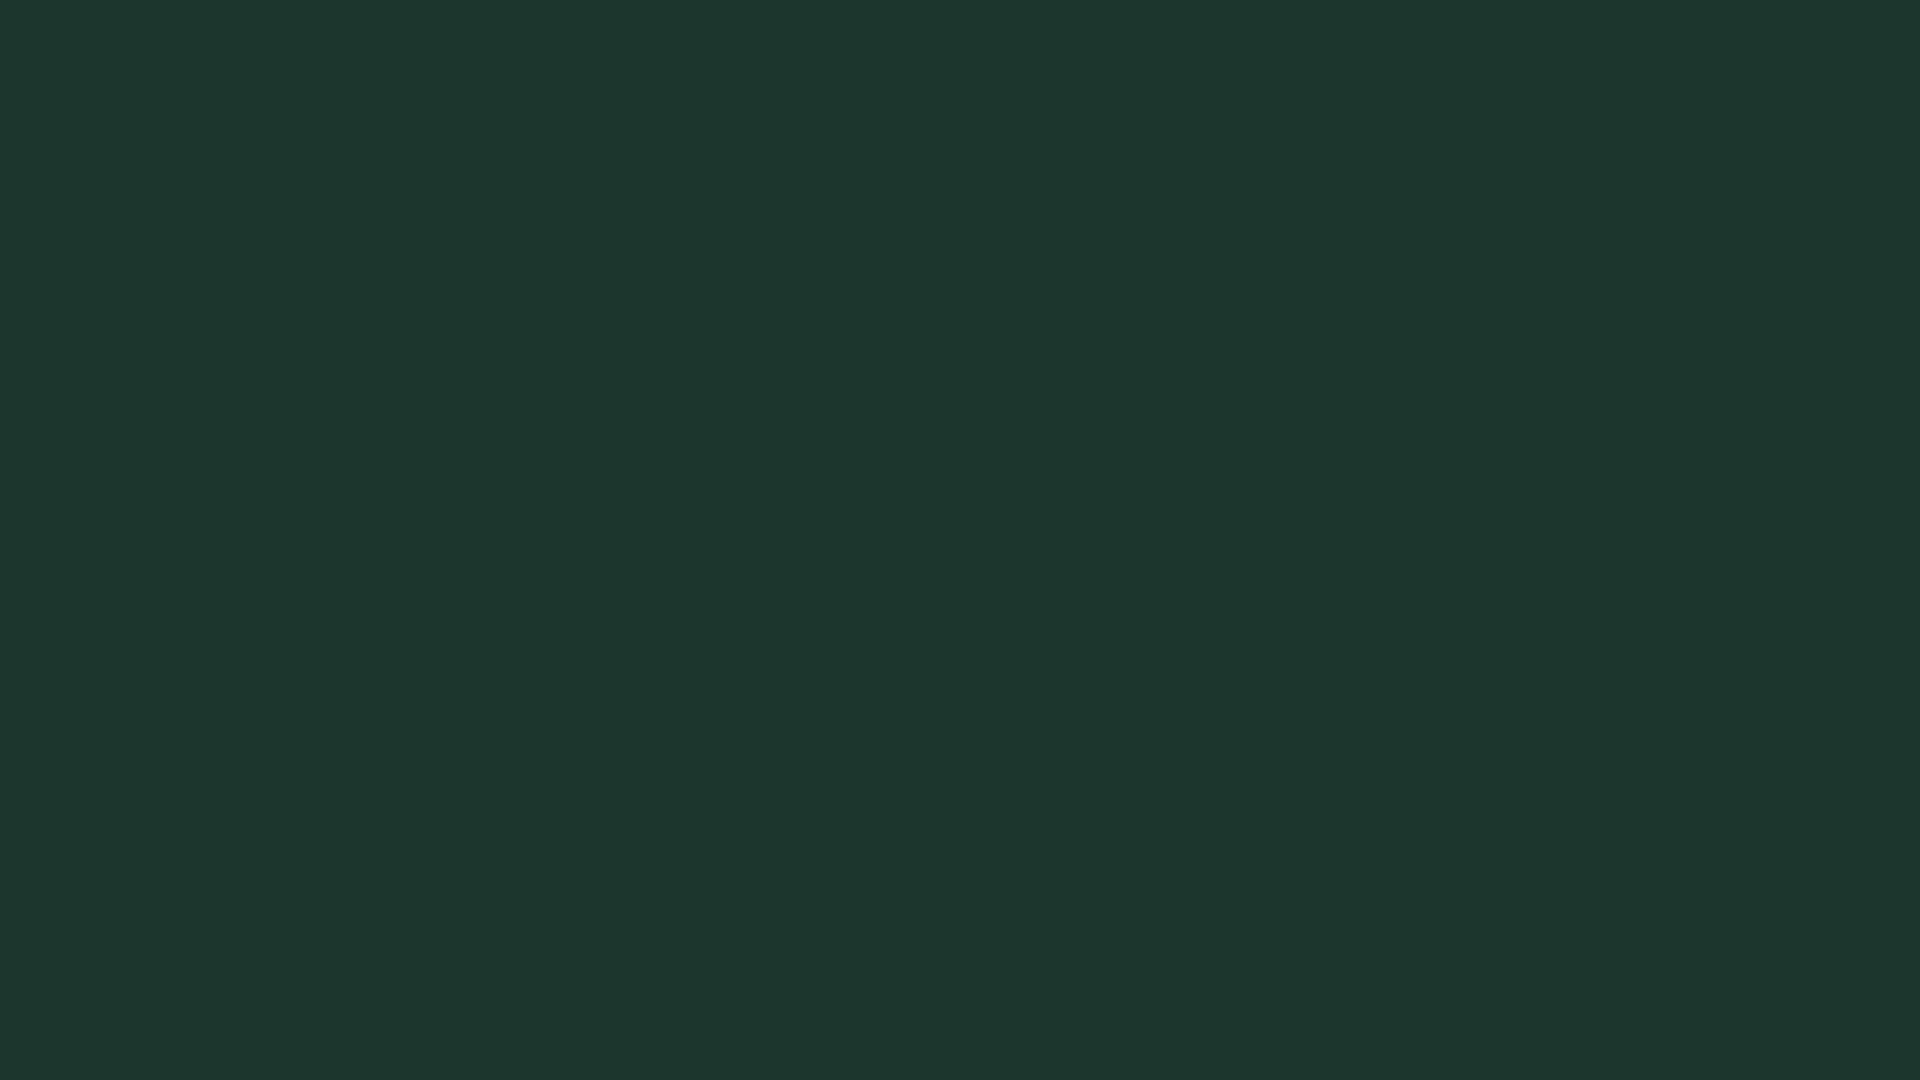 1920x1080 Medium Jungle Green Solid Color Background